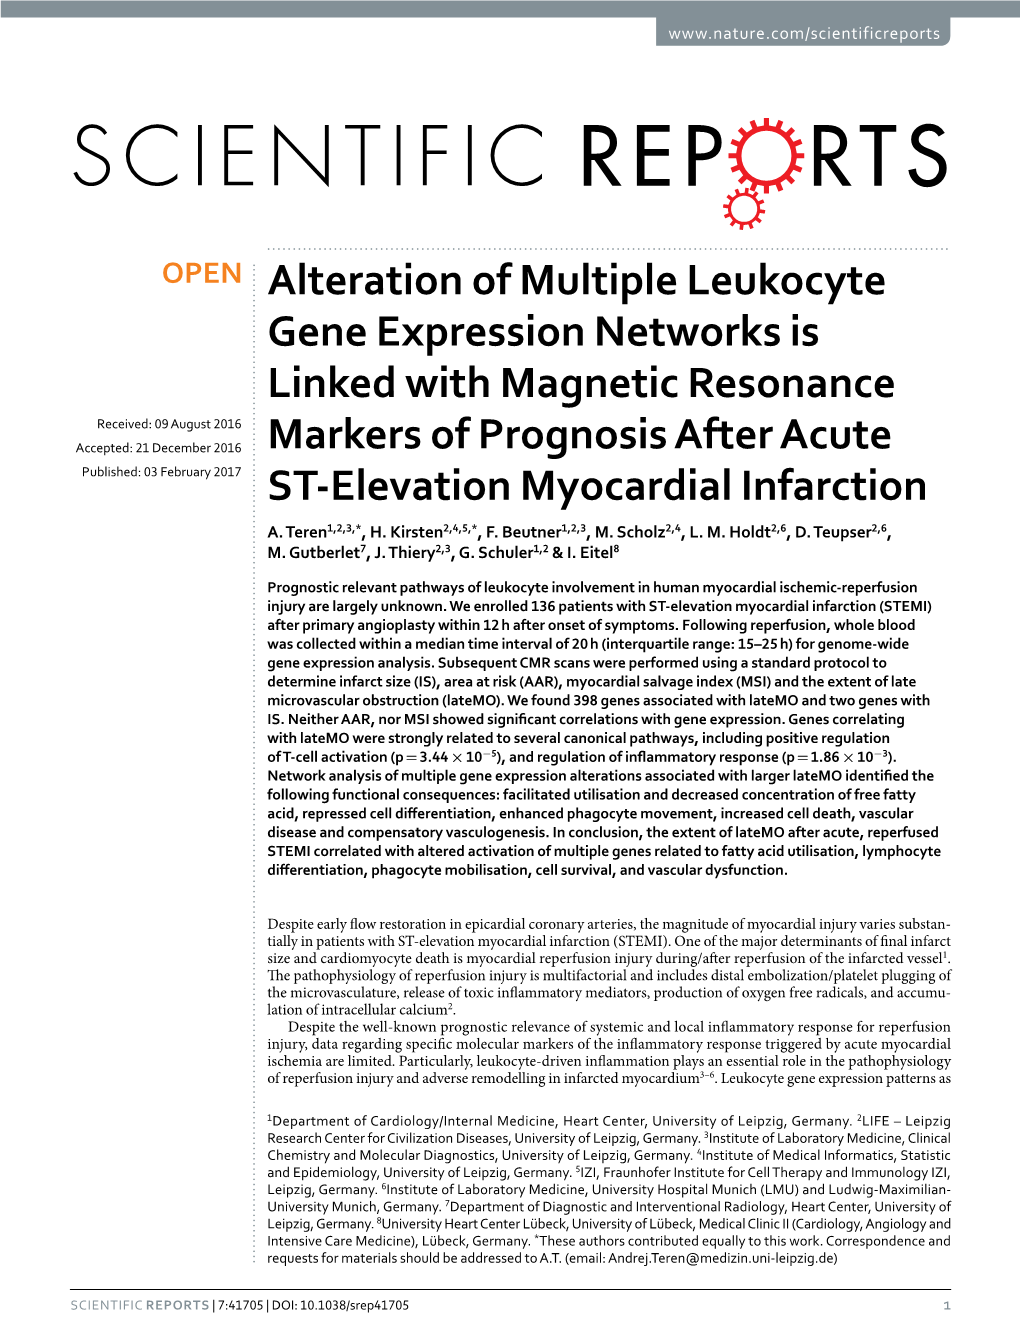 Alteration of Multiple Leukocyte Gene Expression